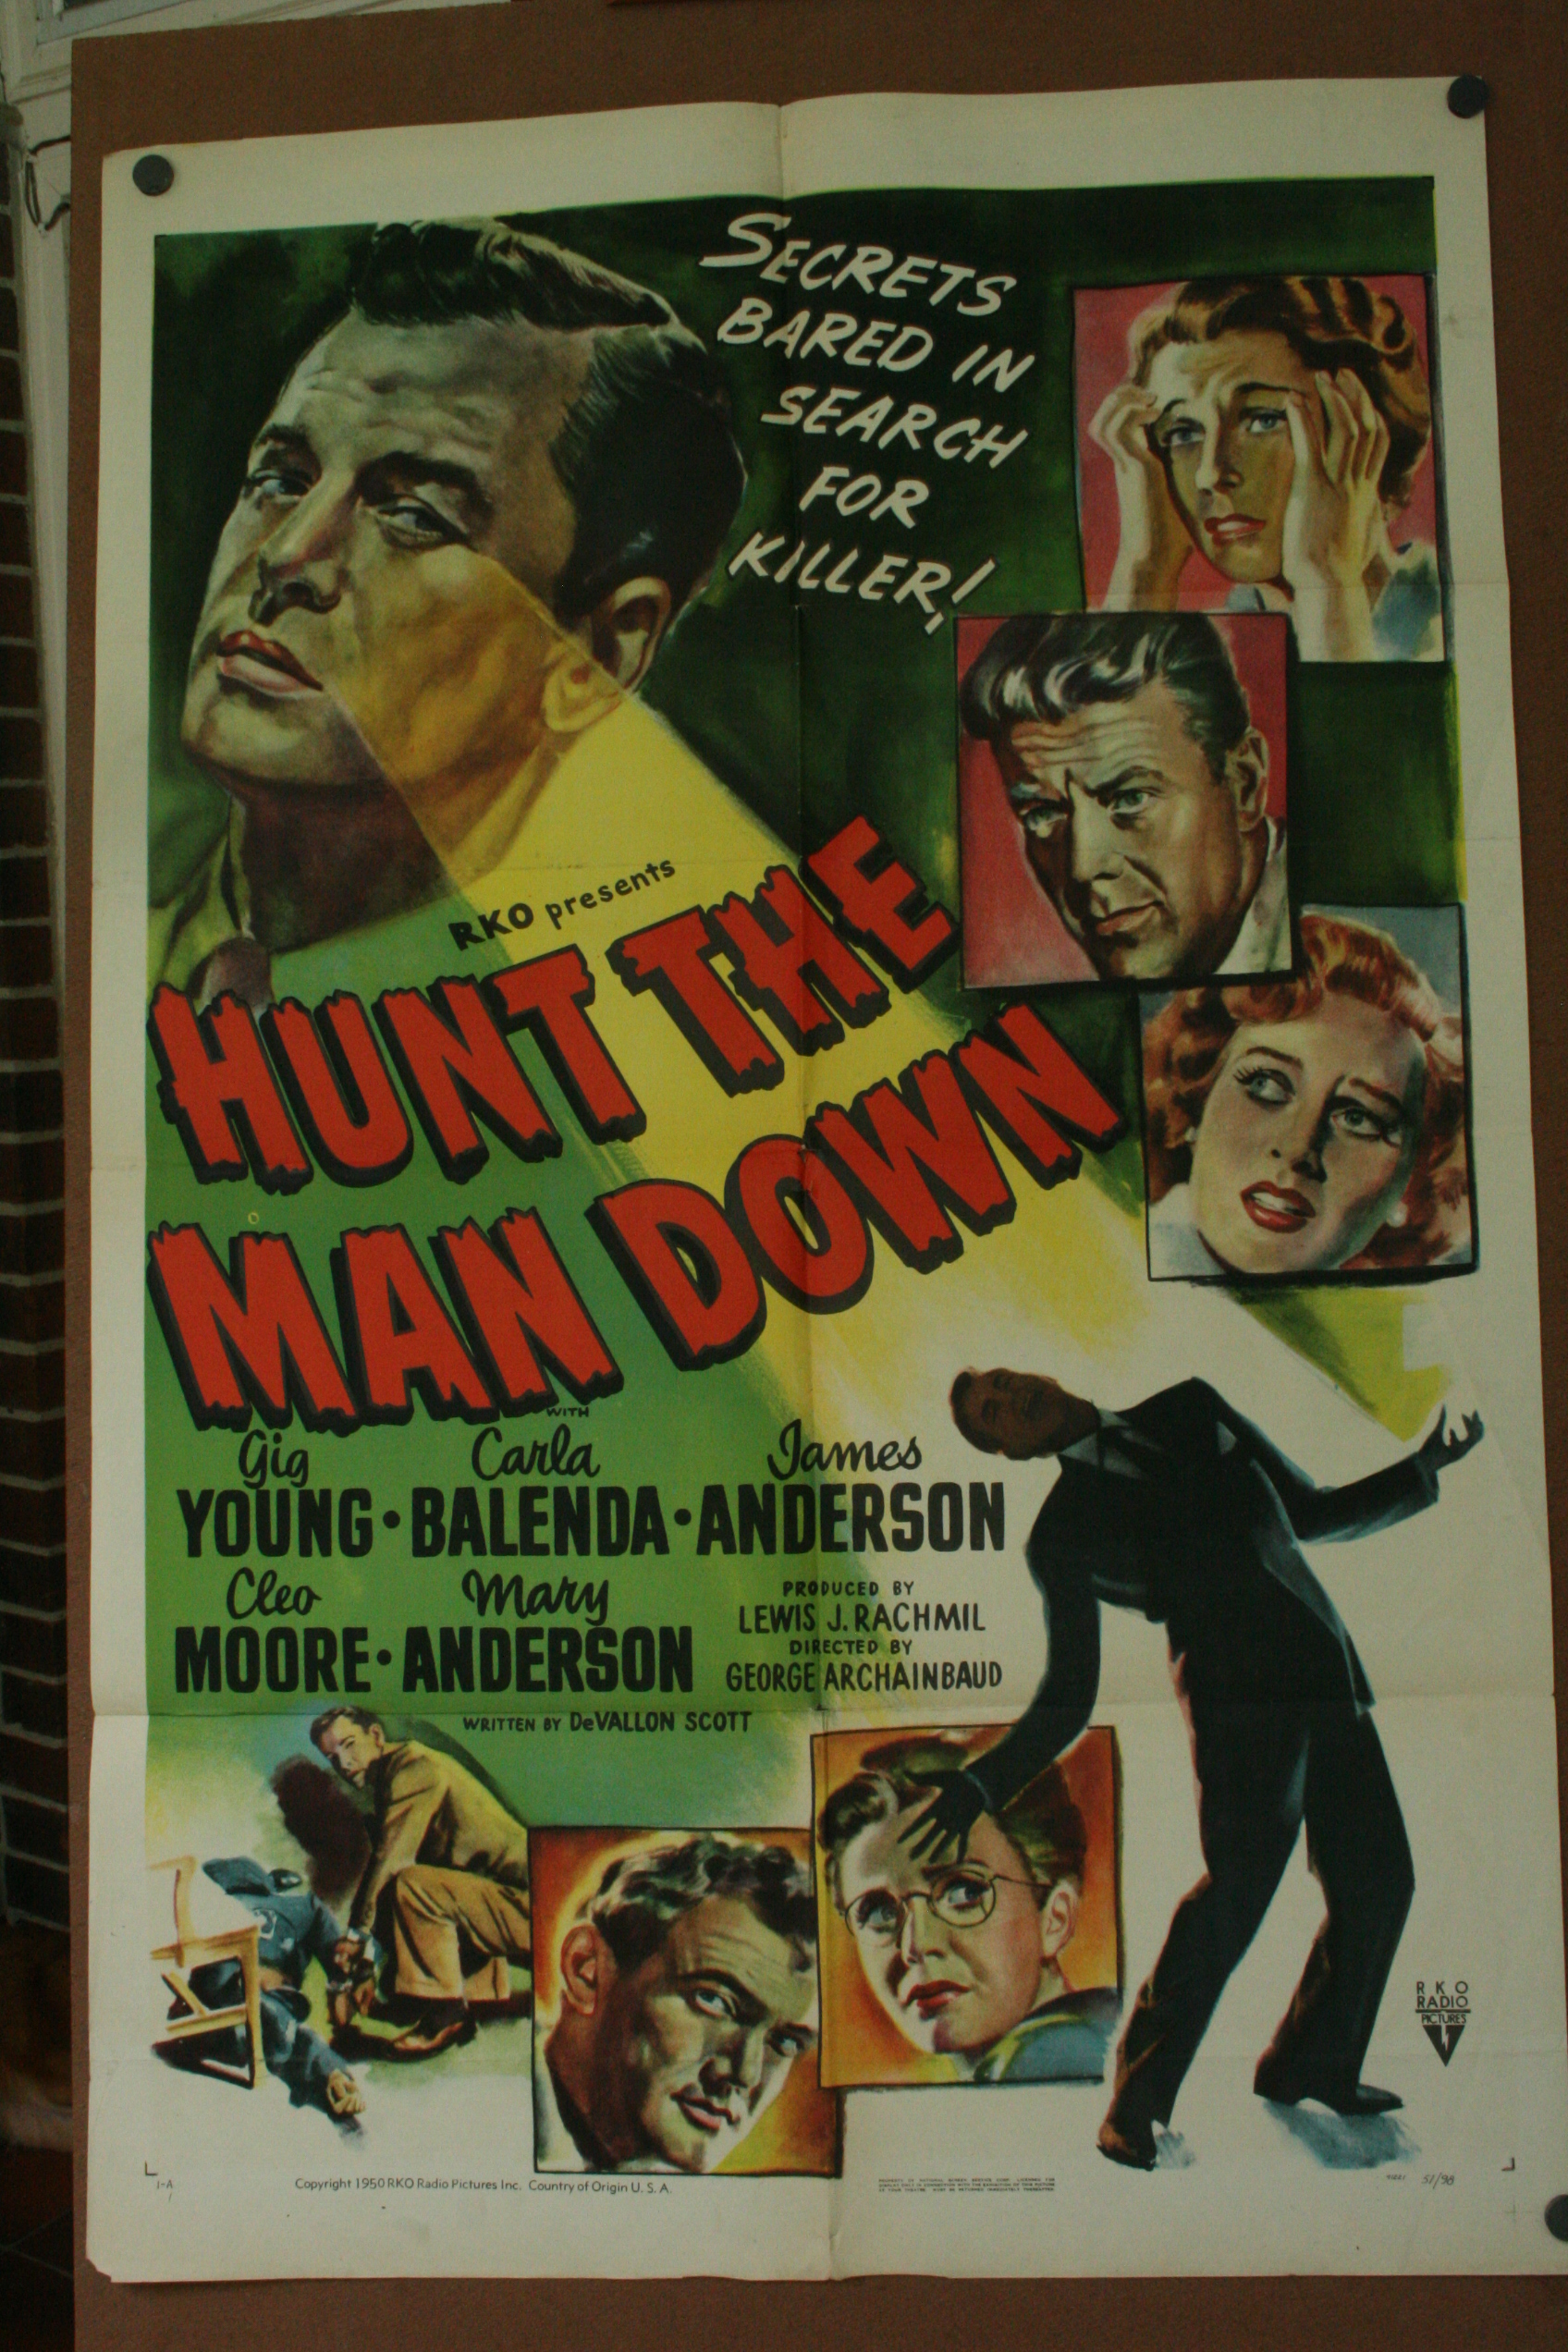 Hunt the Man Down movie